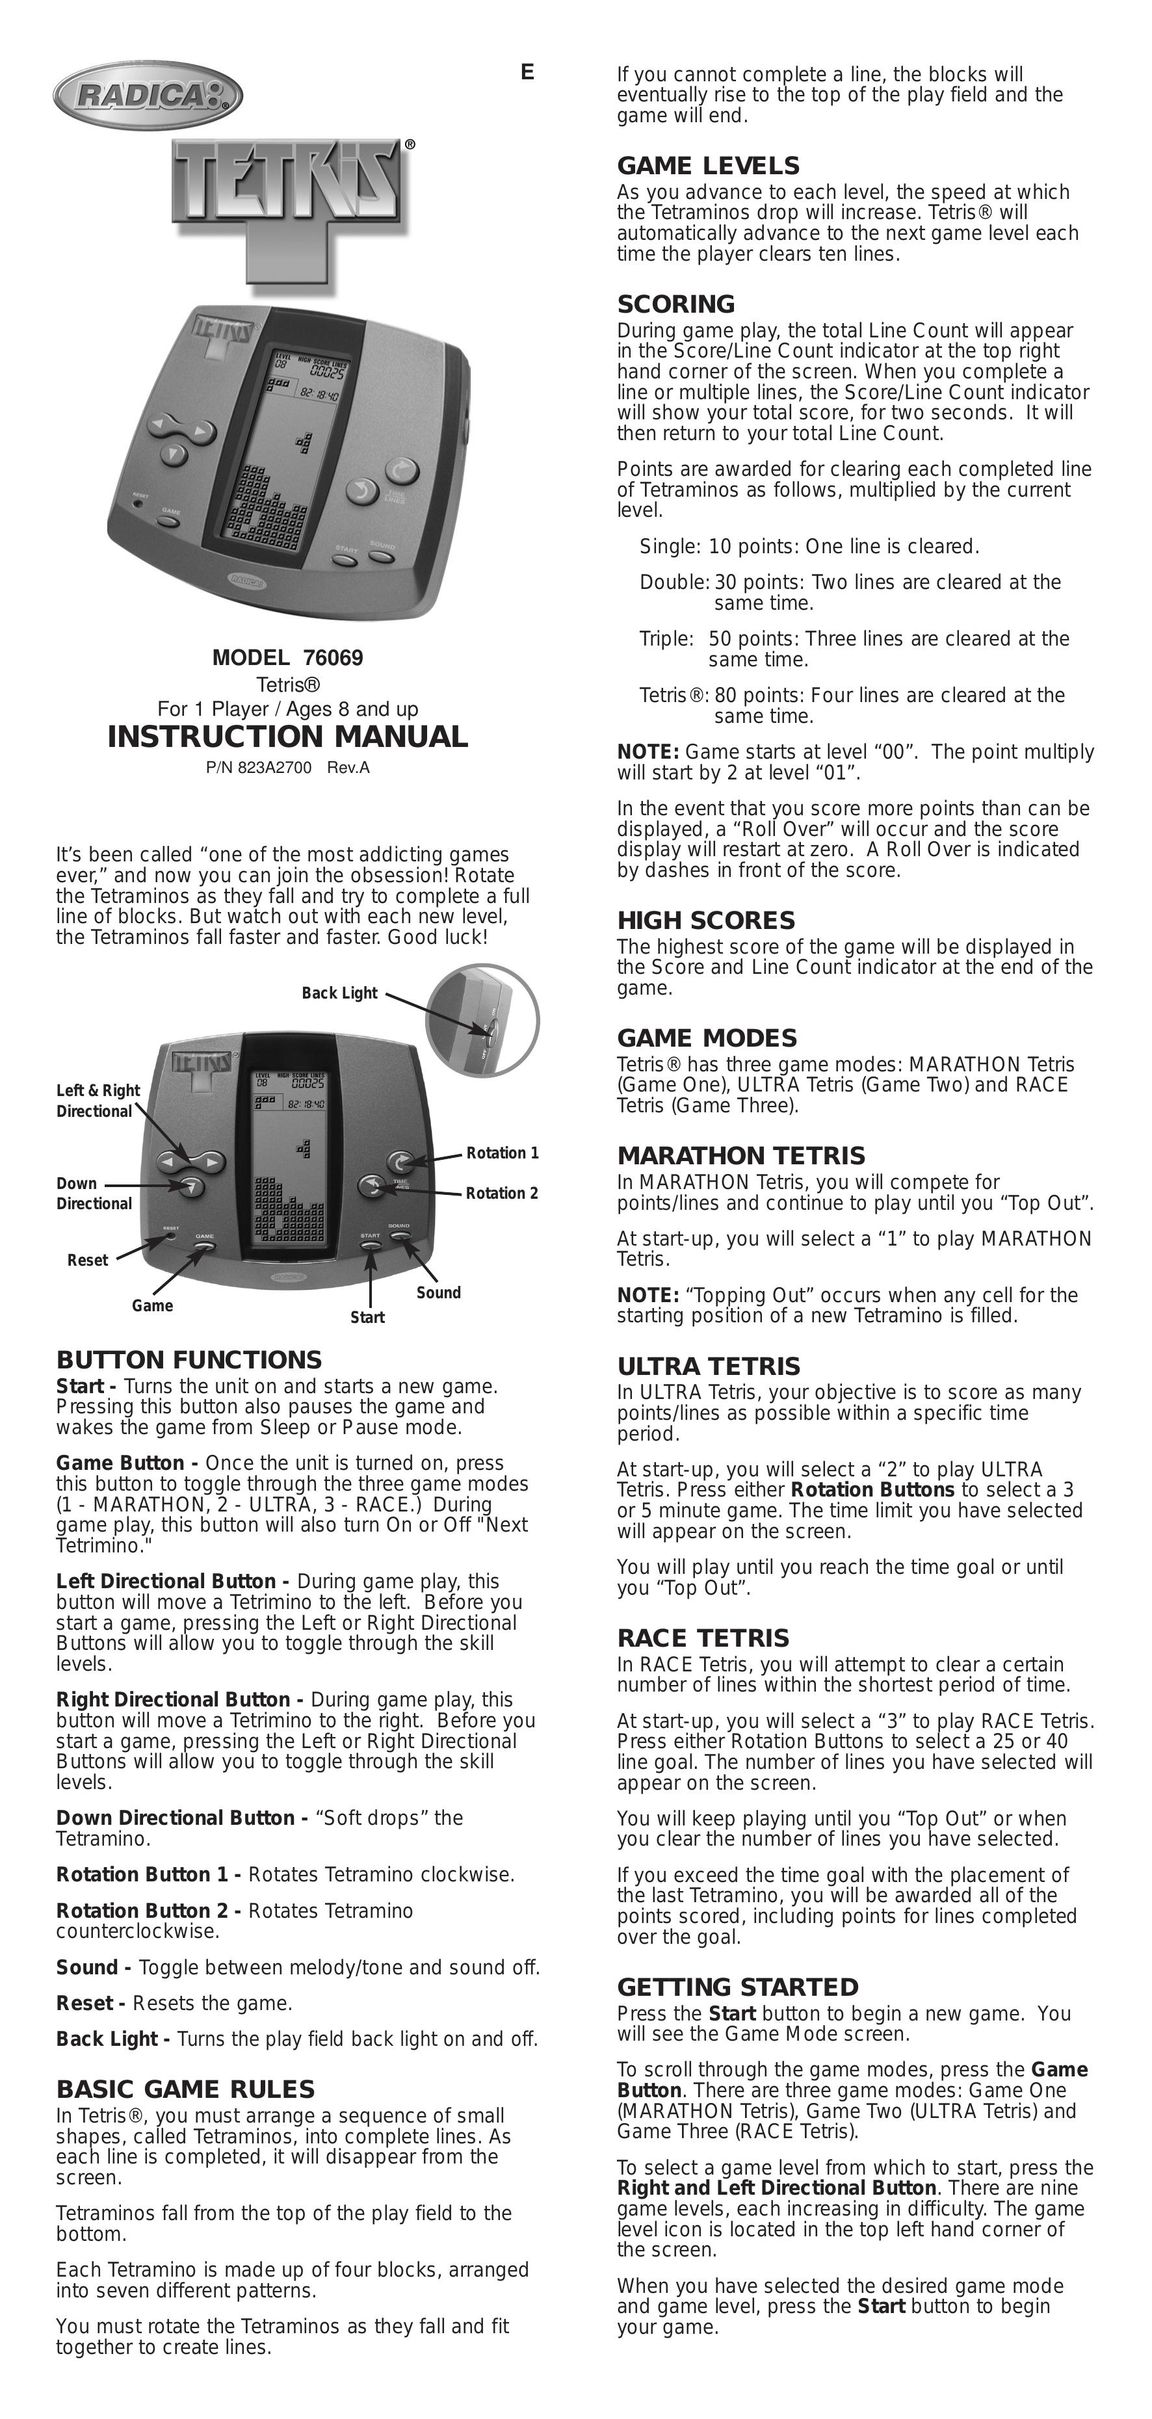 Radica Games 76069 Handheld Game System User Manual